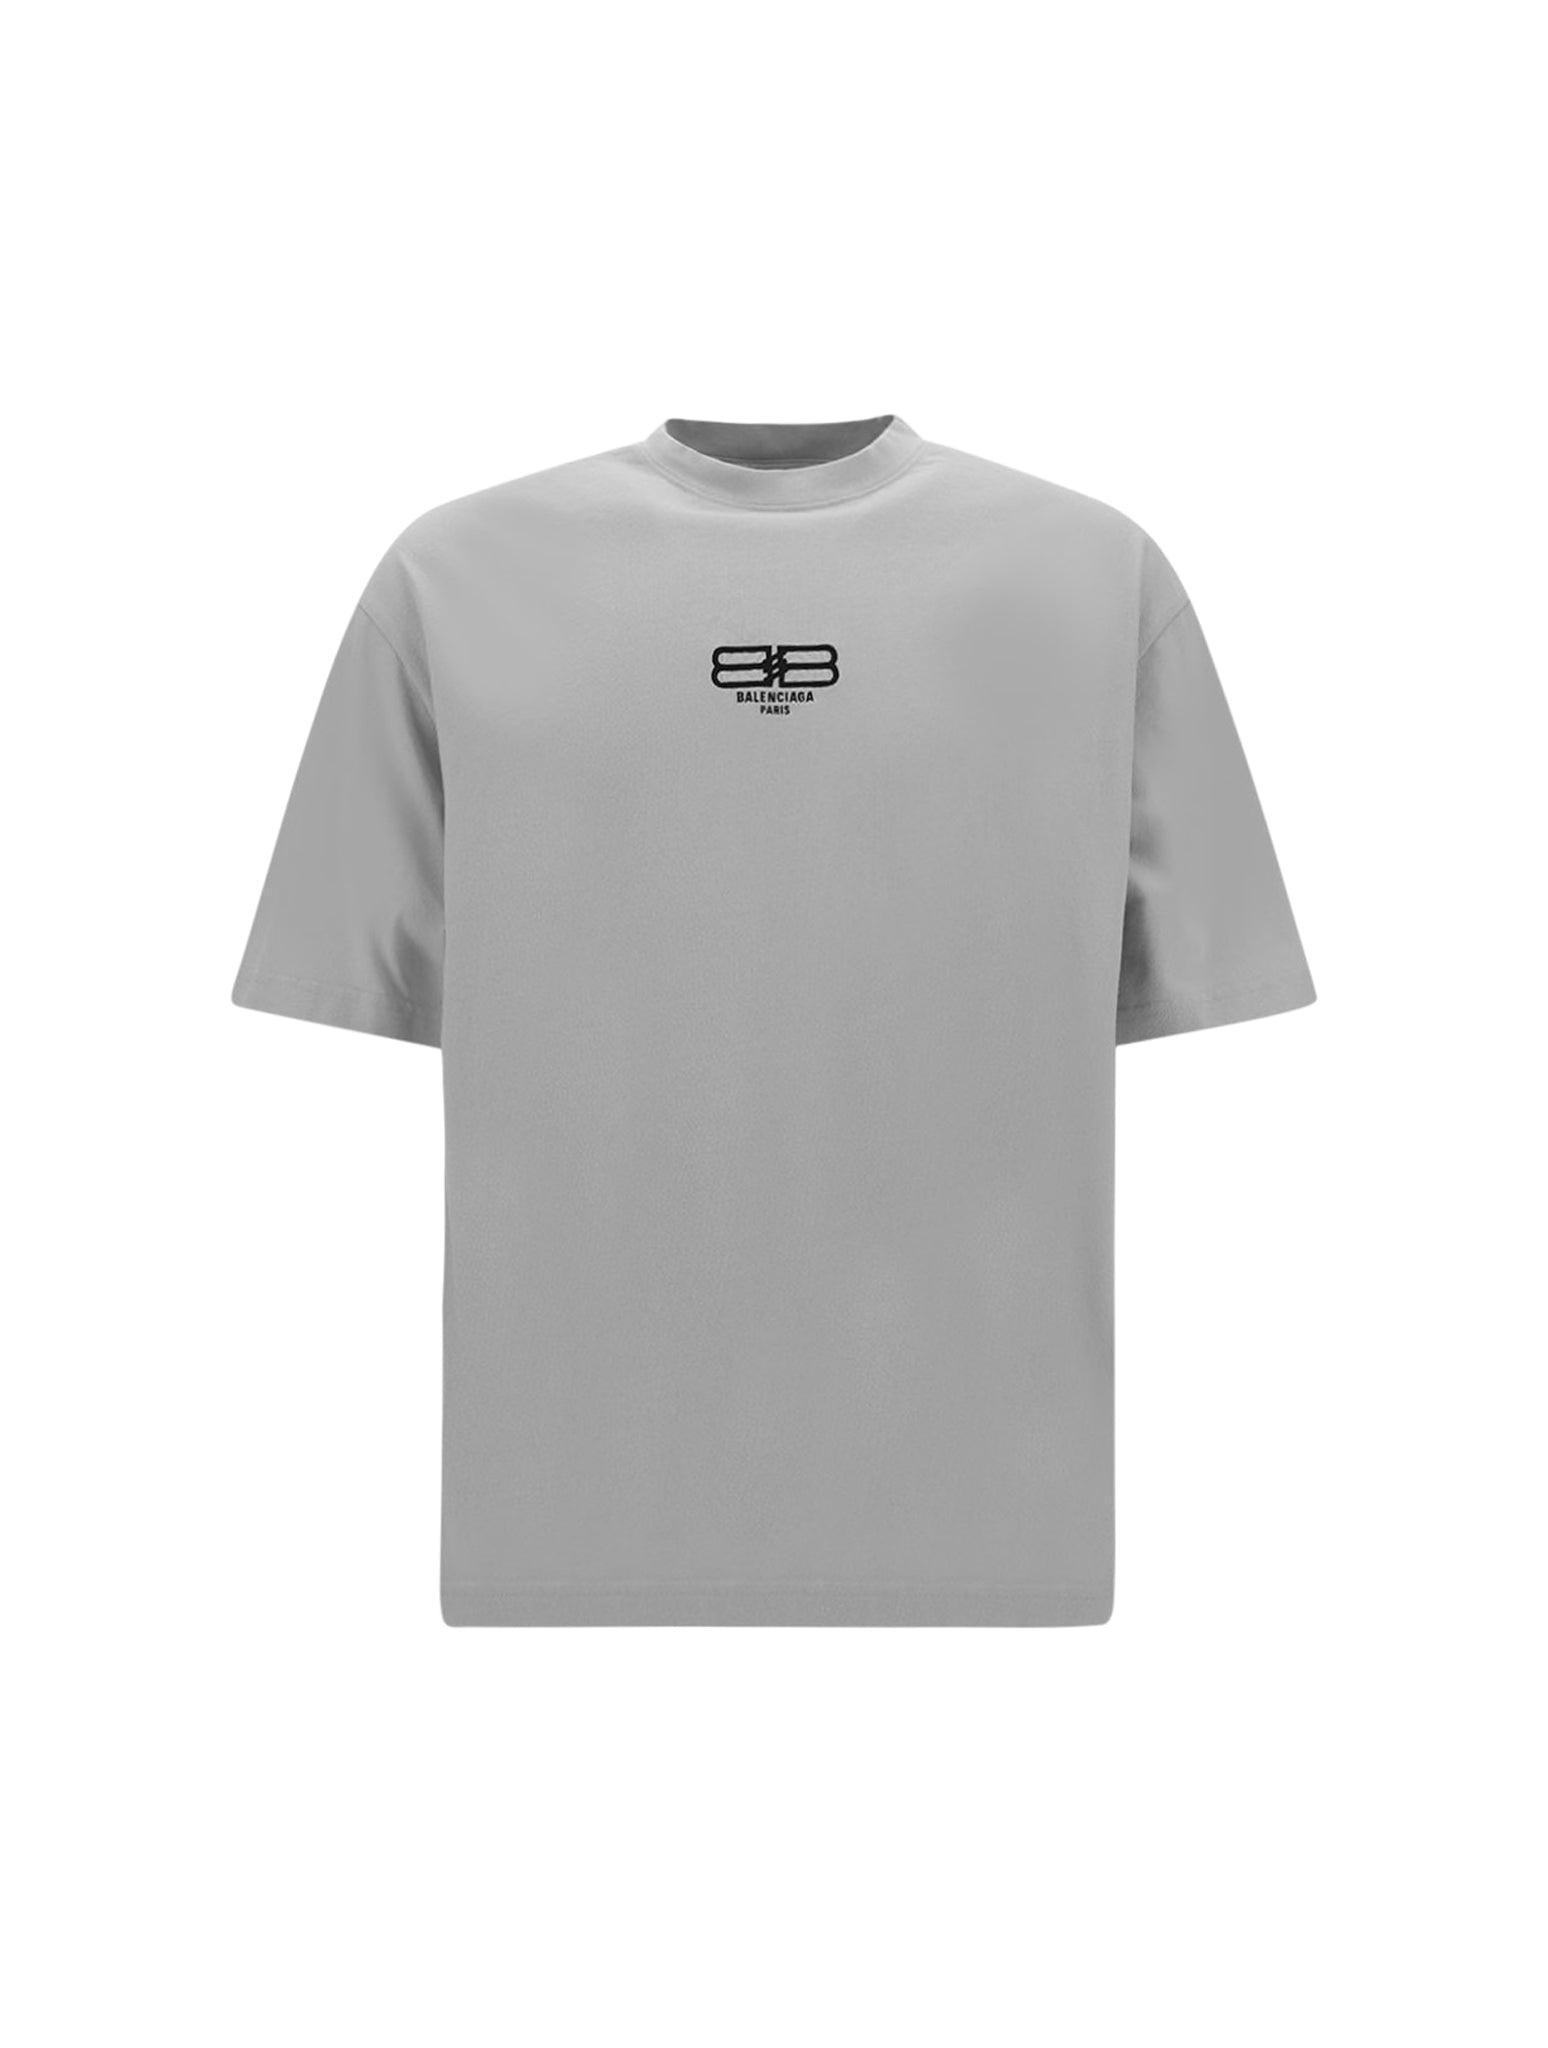 BB Medium Fit T Shirt in Grey - Balenciaga